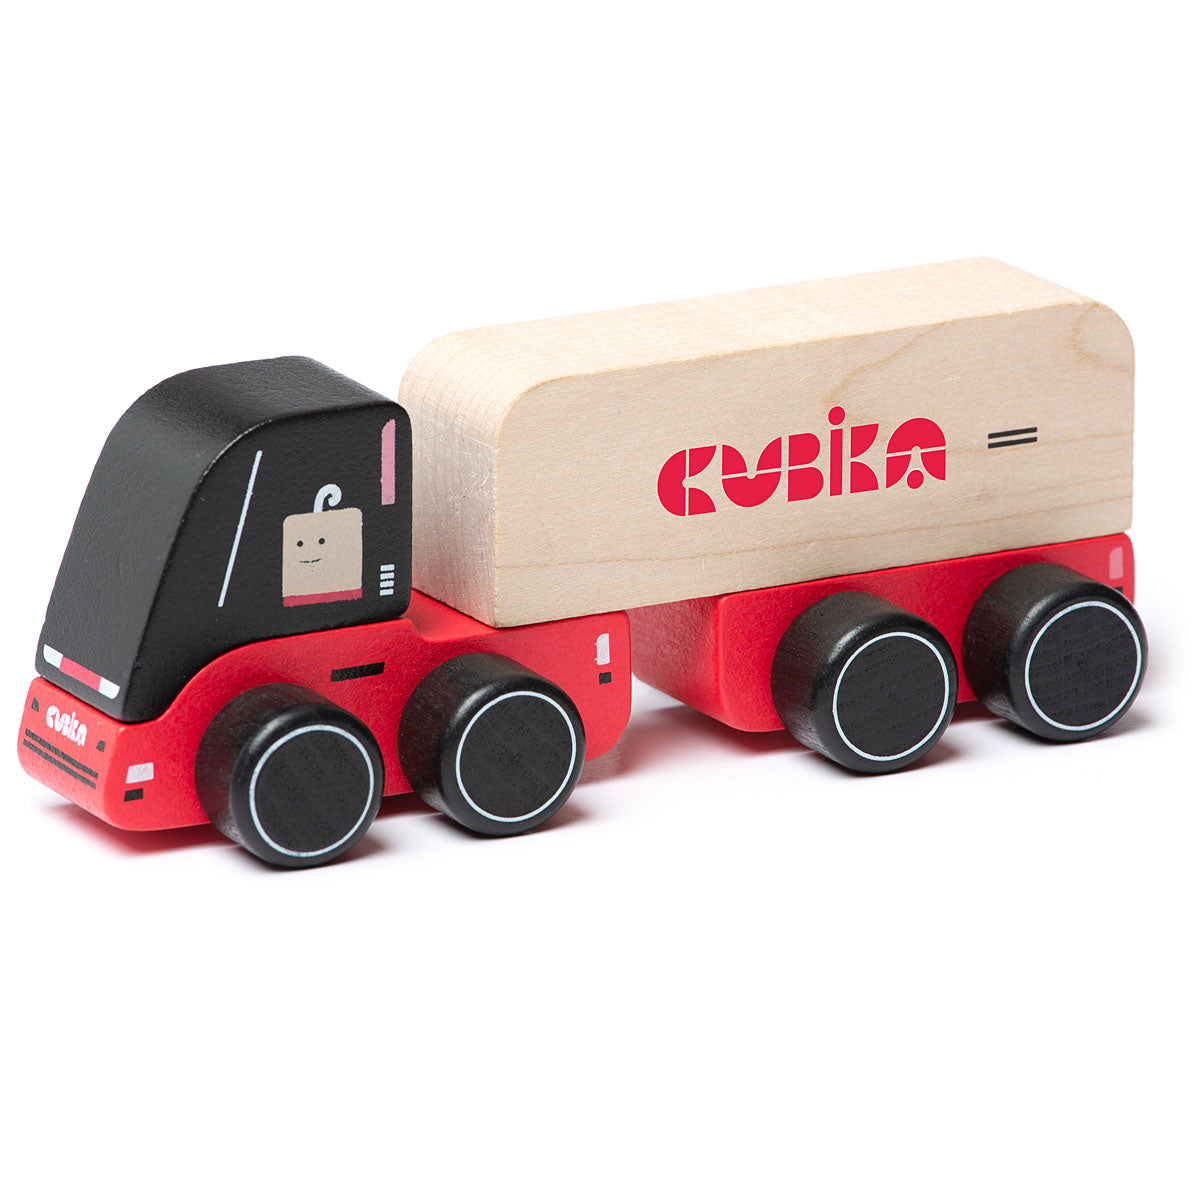 Wise Elk/Cubika Wooden toy - Truck Cubika 2